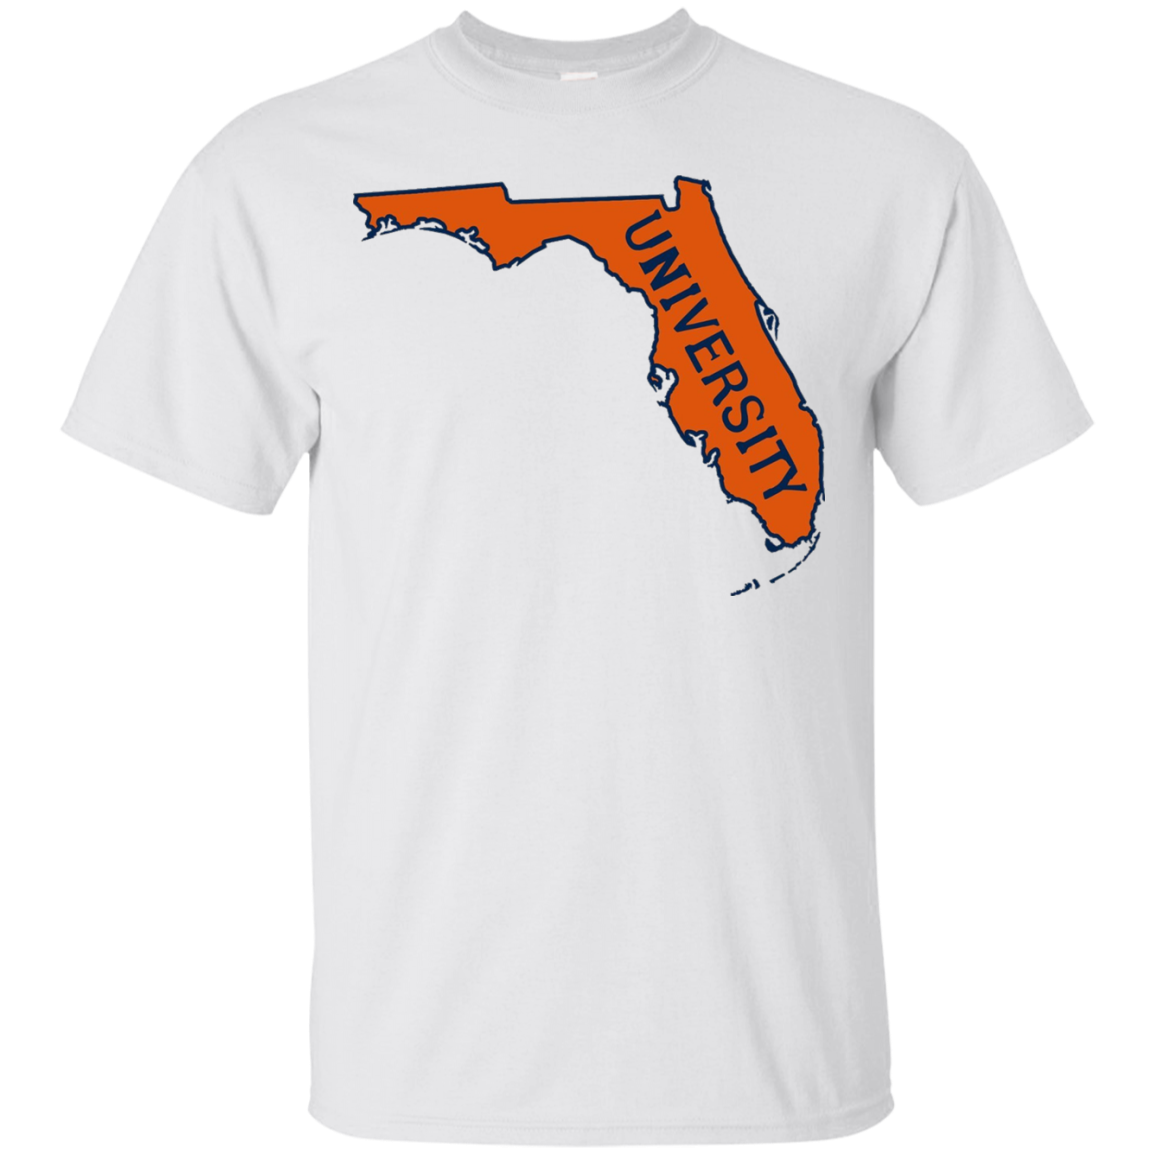 Florida Gators Fans. T-Shirt. Sizes Up To 3XL.